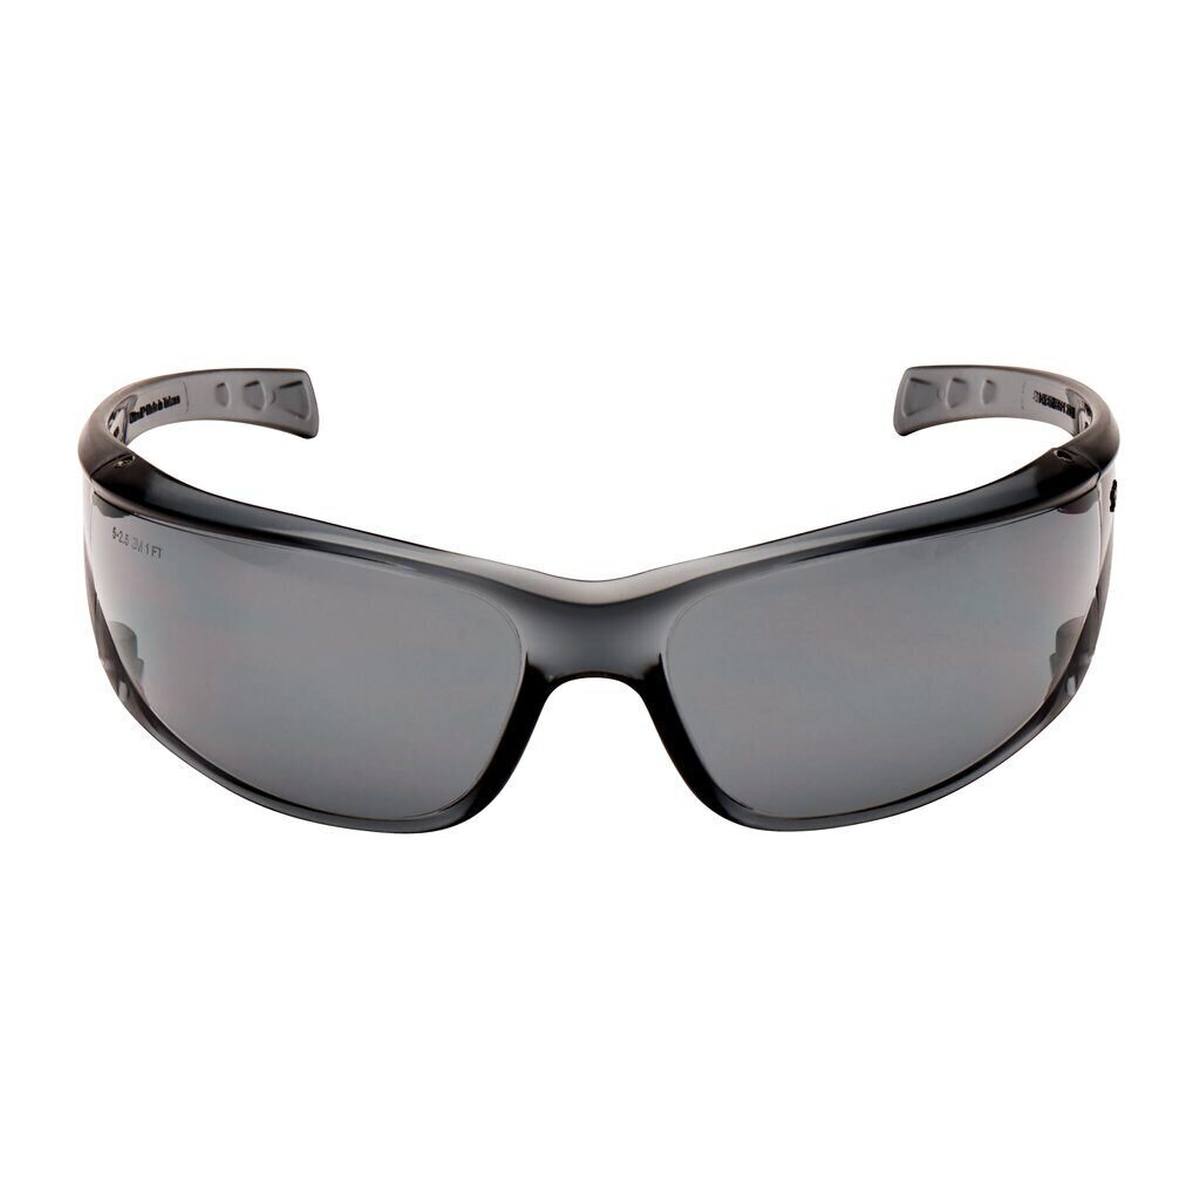 3M Virtua AP Schutzbrille, grau, VIRG